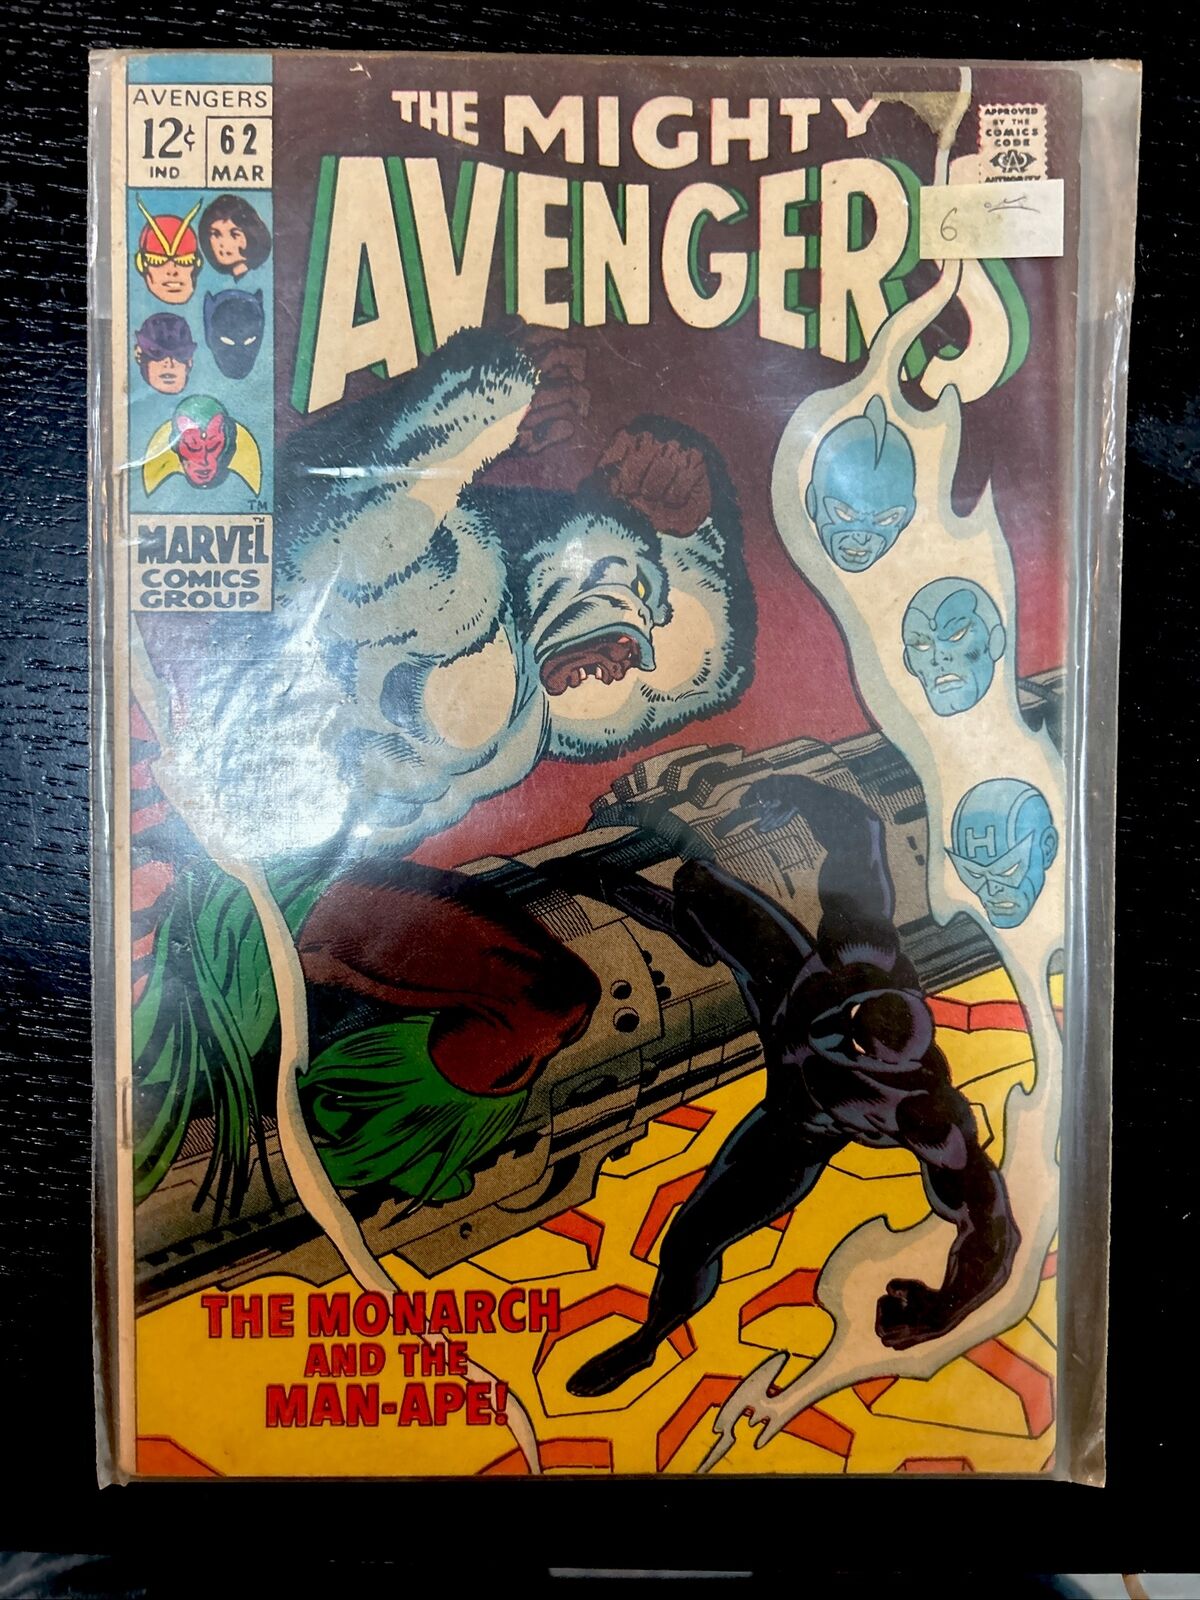 The Mighty Avengers #62 1st Man-Ape M’Baku, Black Panther 1969 Marvel Comic Book